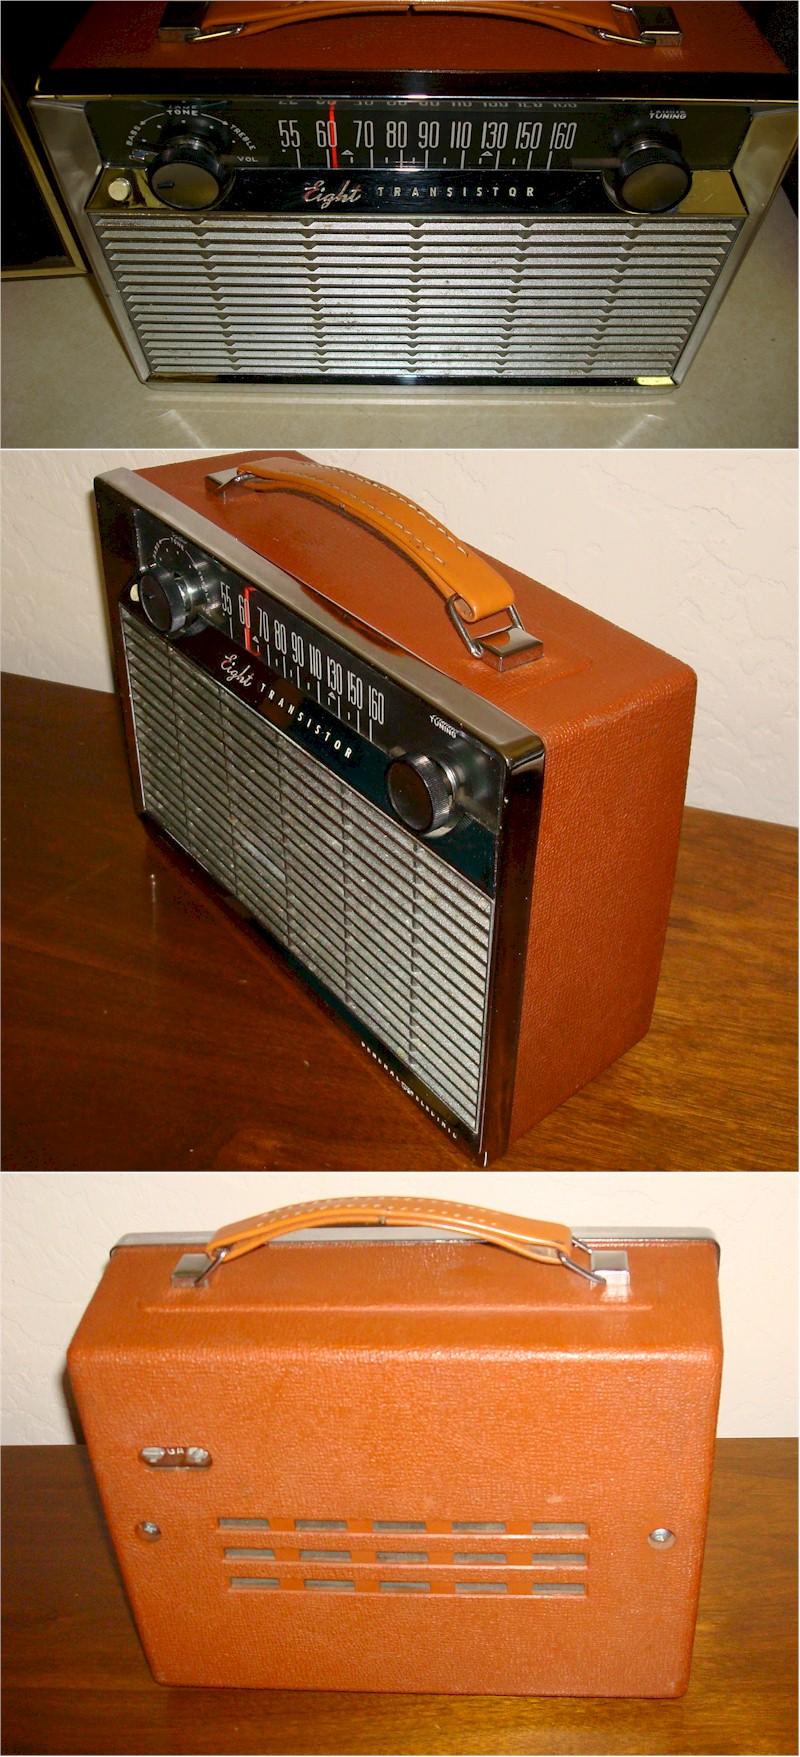 General Electric PE-780 Portable (1960)